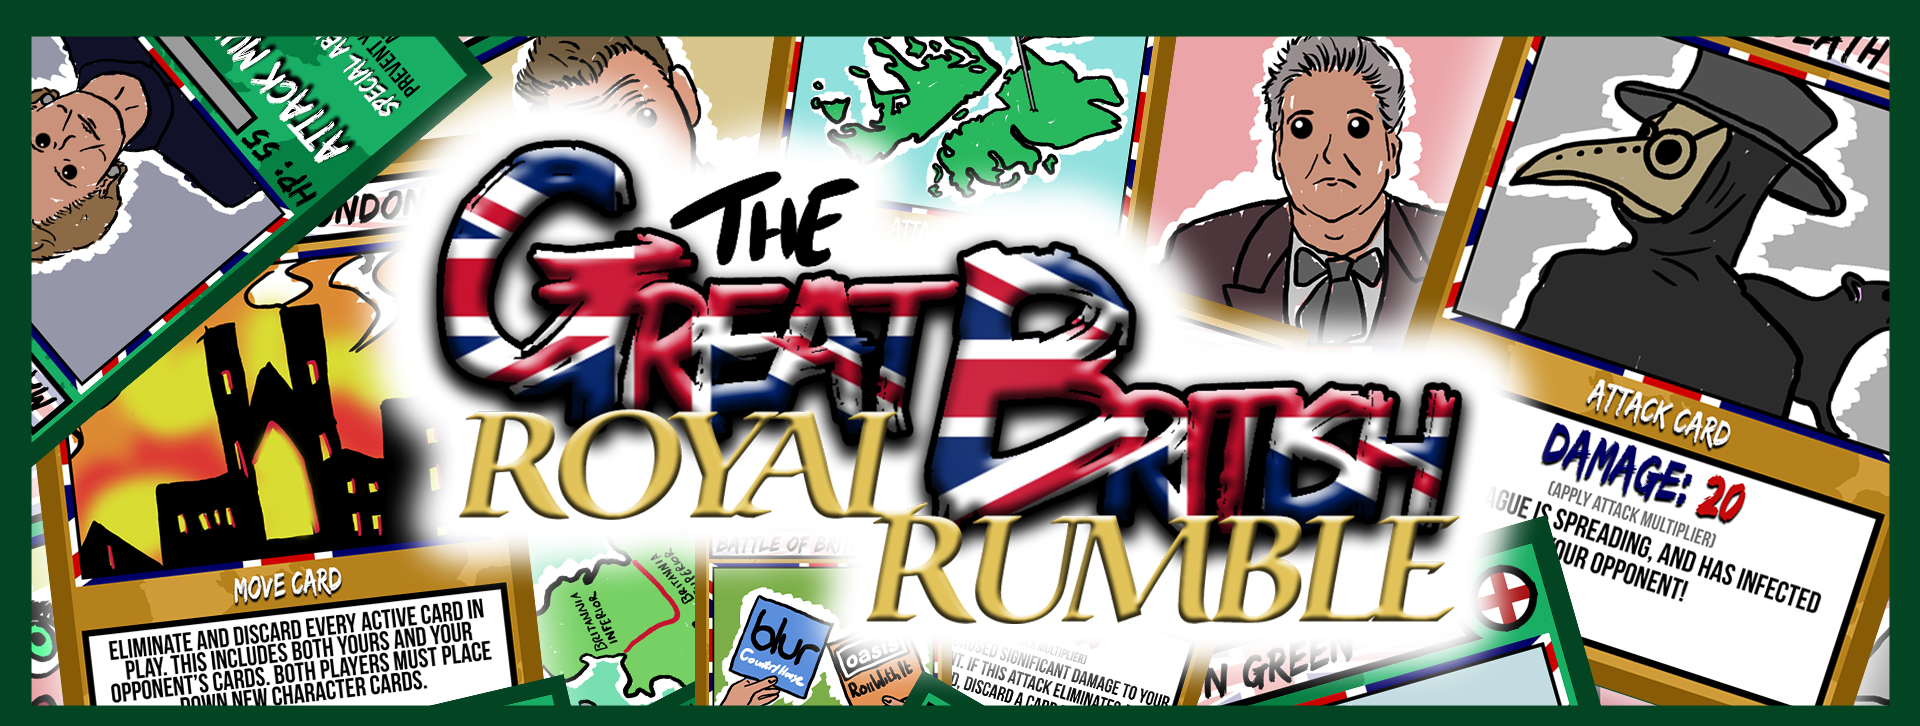 The Great British Royal Rumble